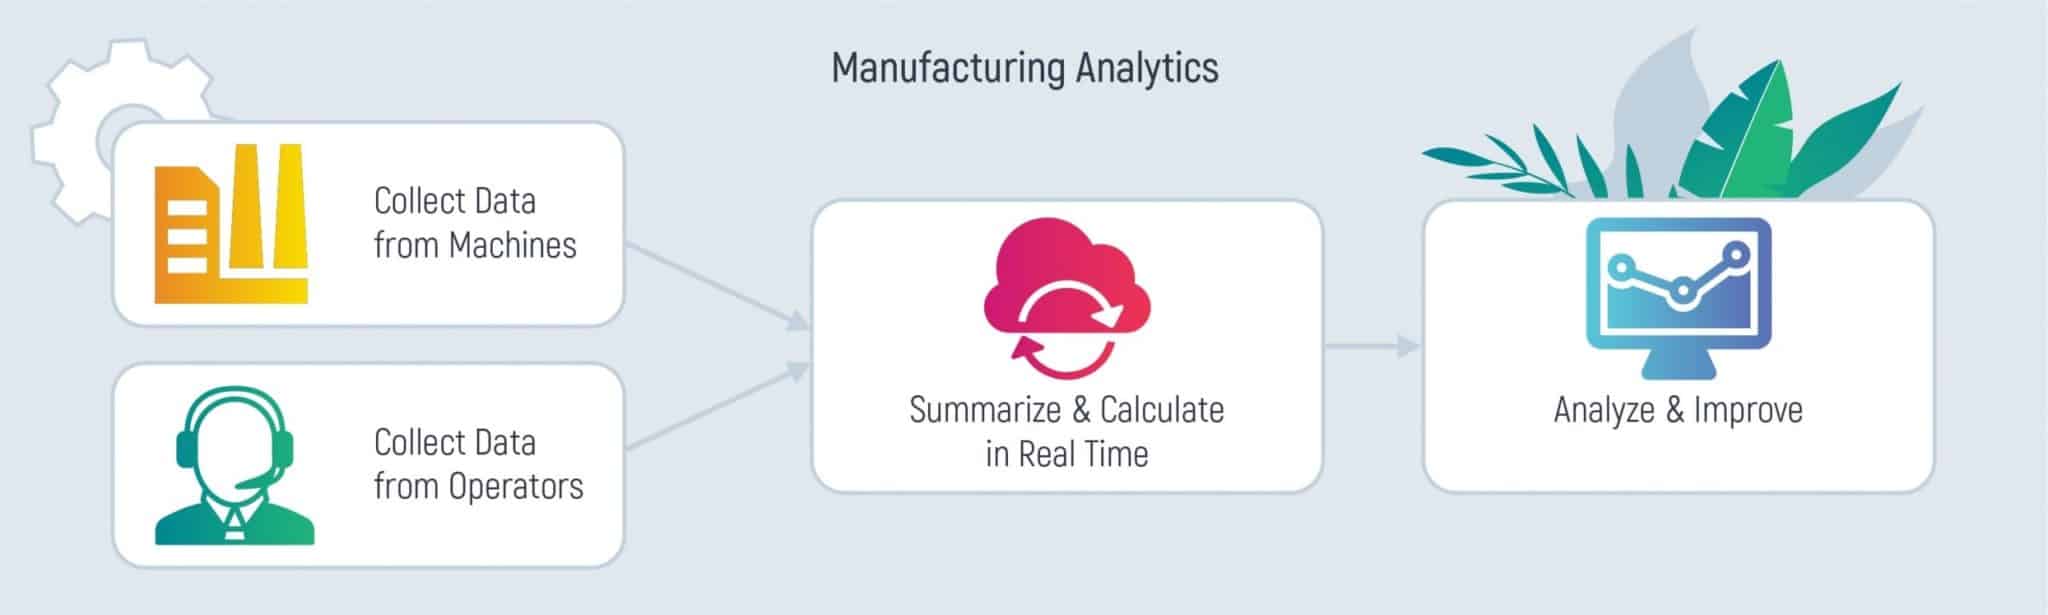 Manufacturing Analytics Process